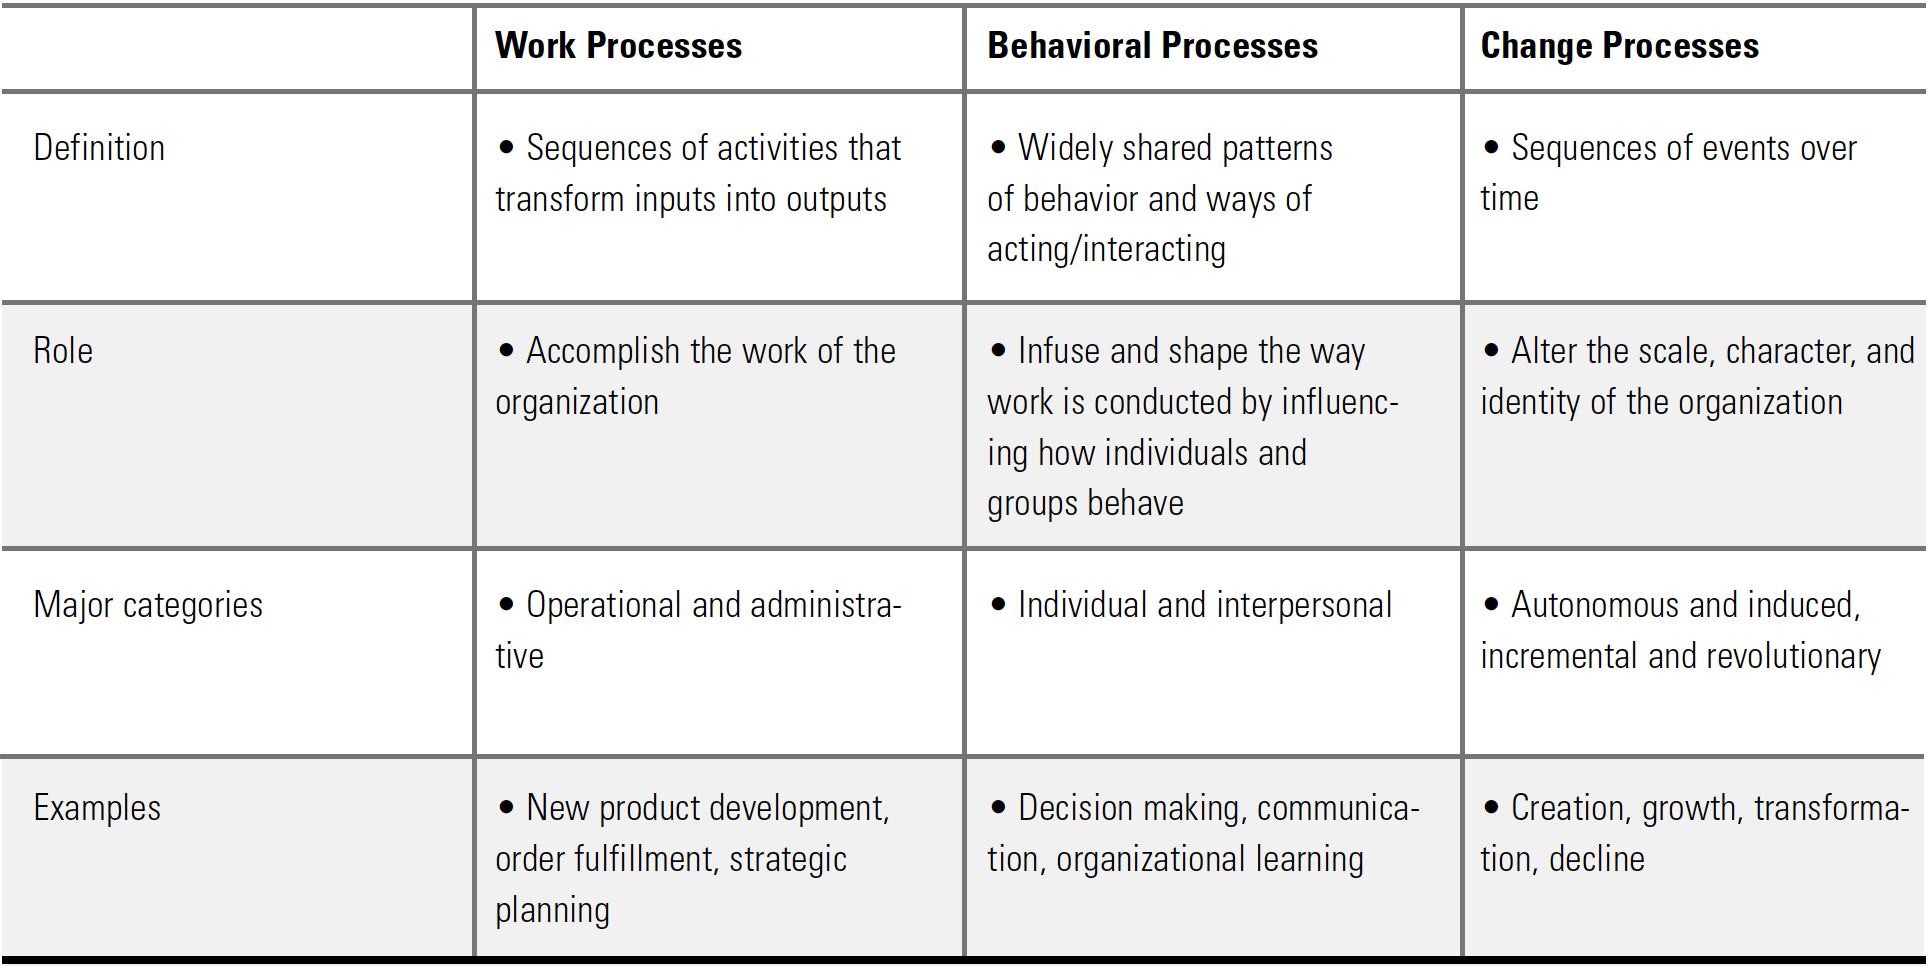 why does organizational behavior matter